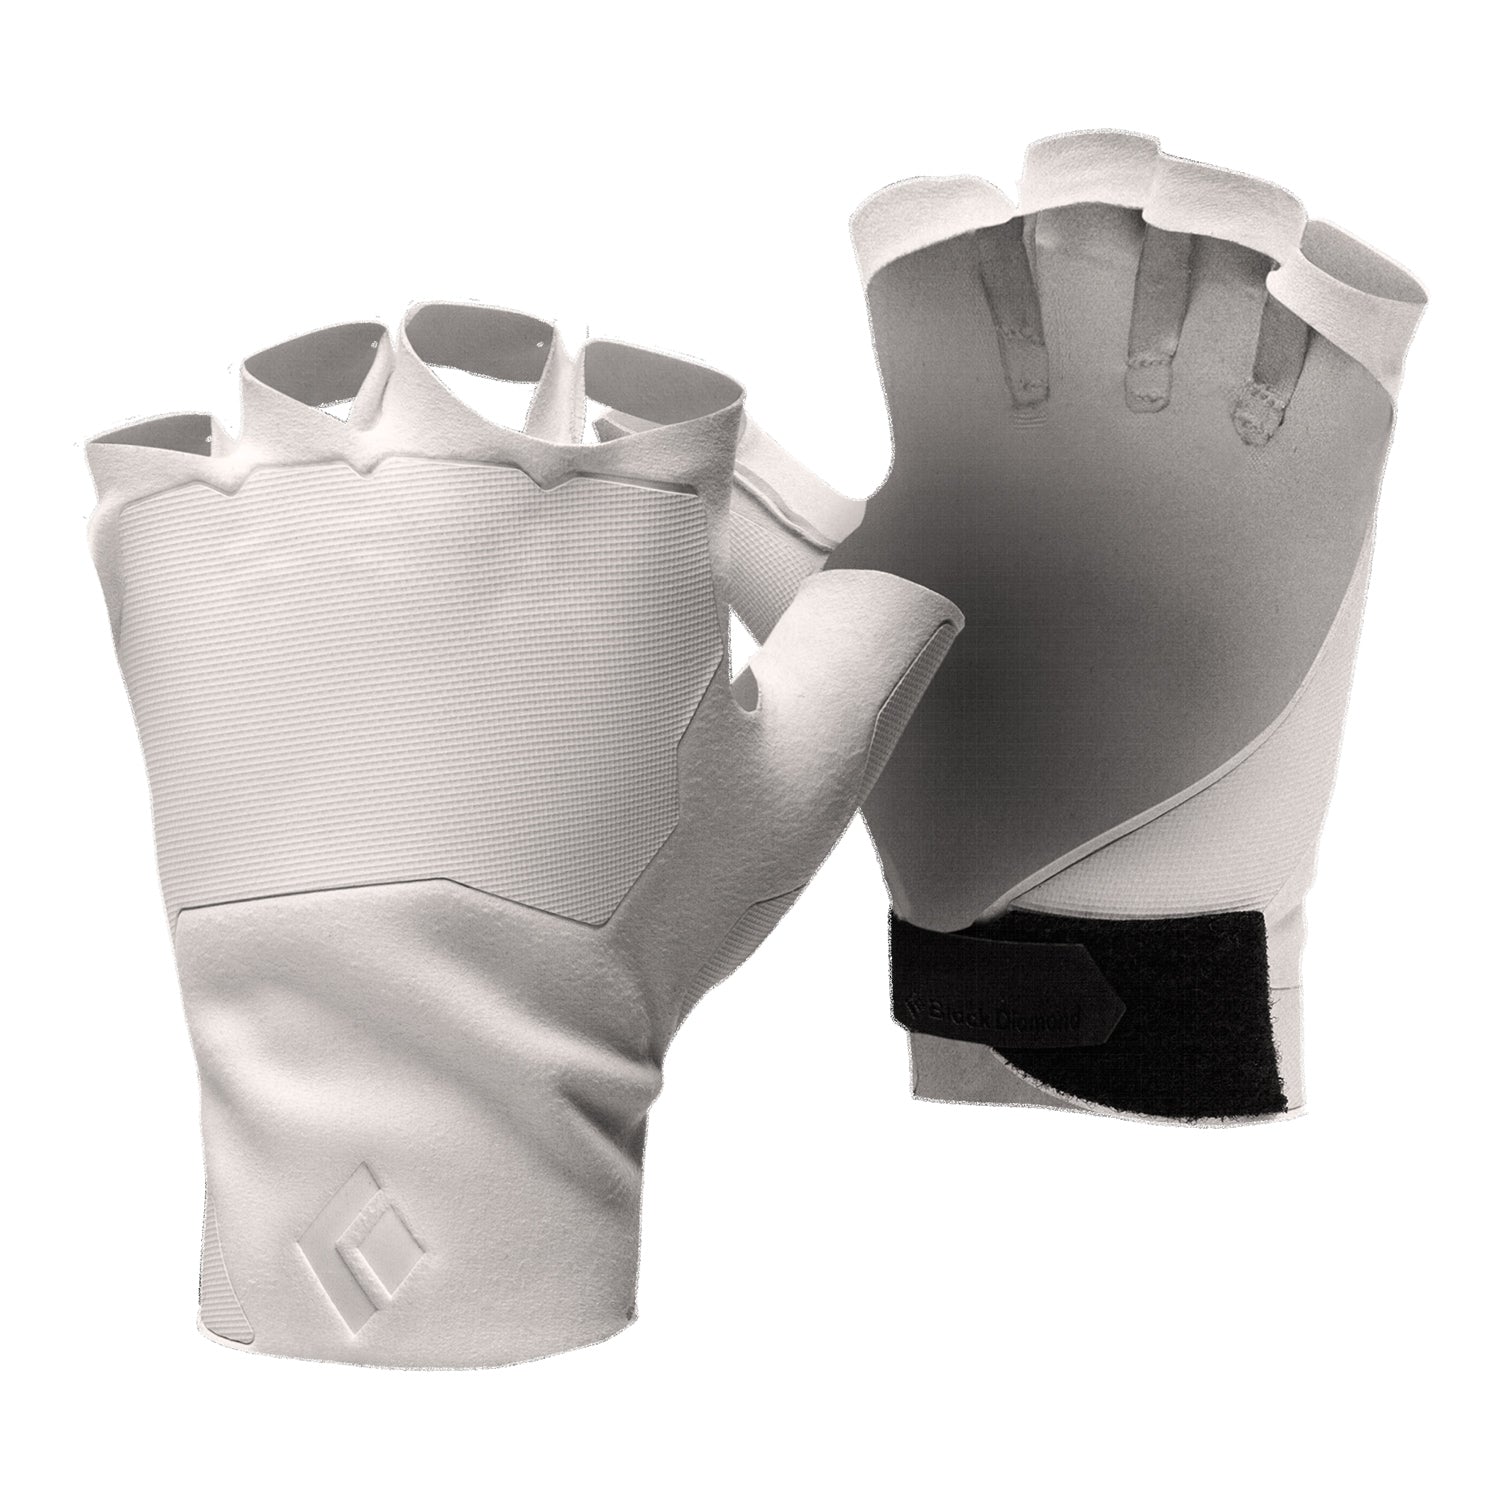 black diamond crack climbing gloves in white